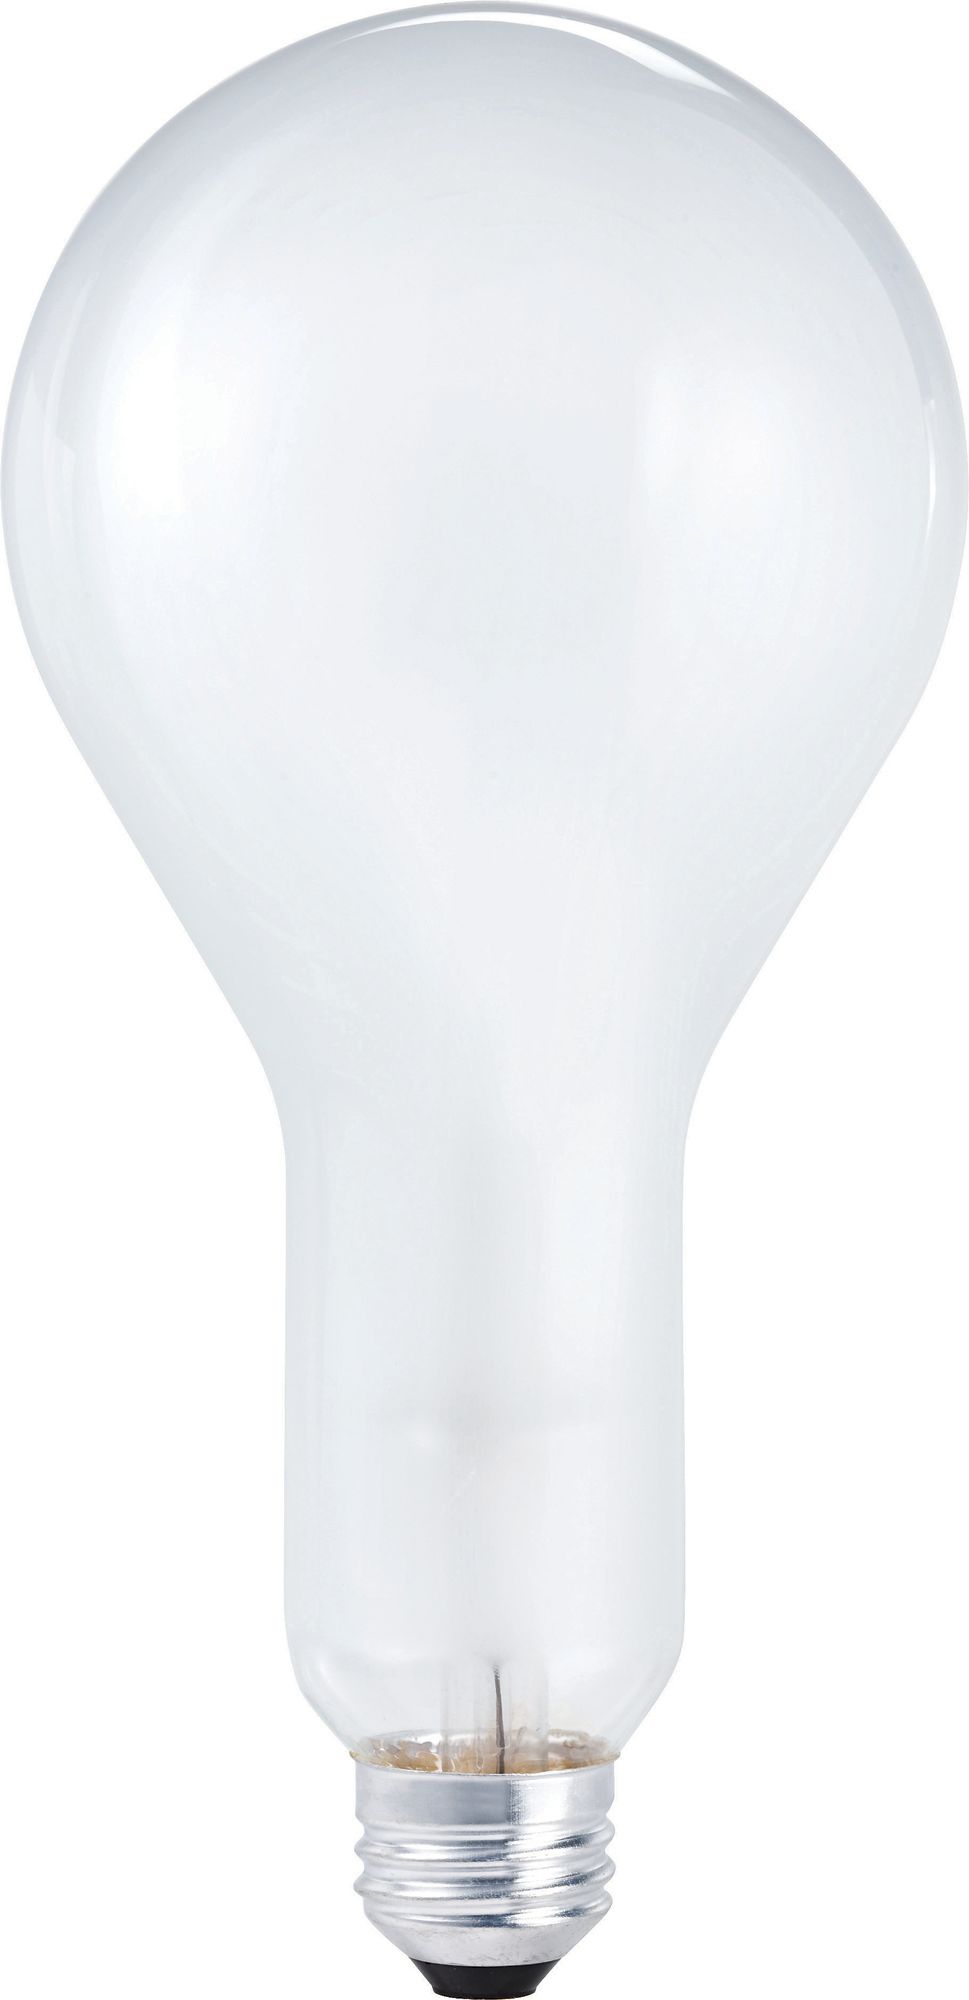 NEW SLI Lighting 60016 75W Rough Service Bulb 